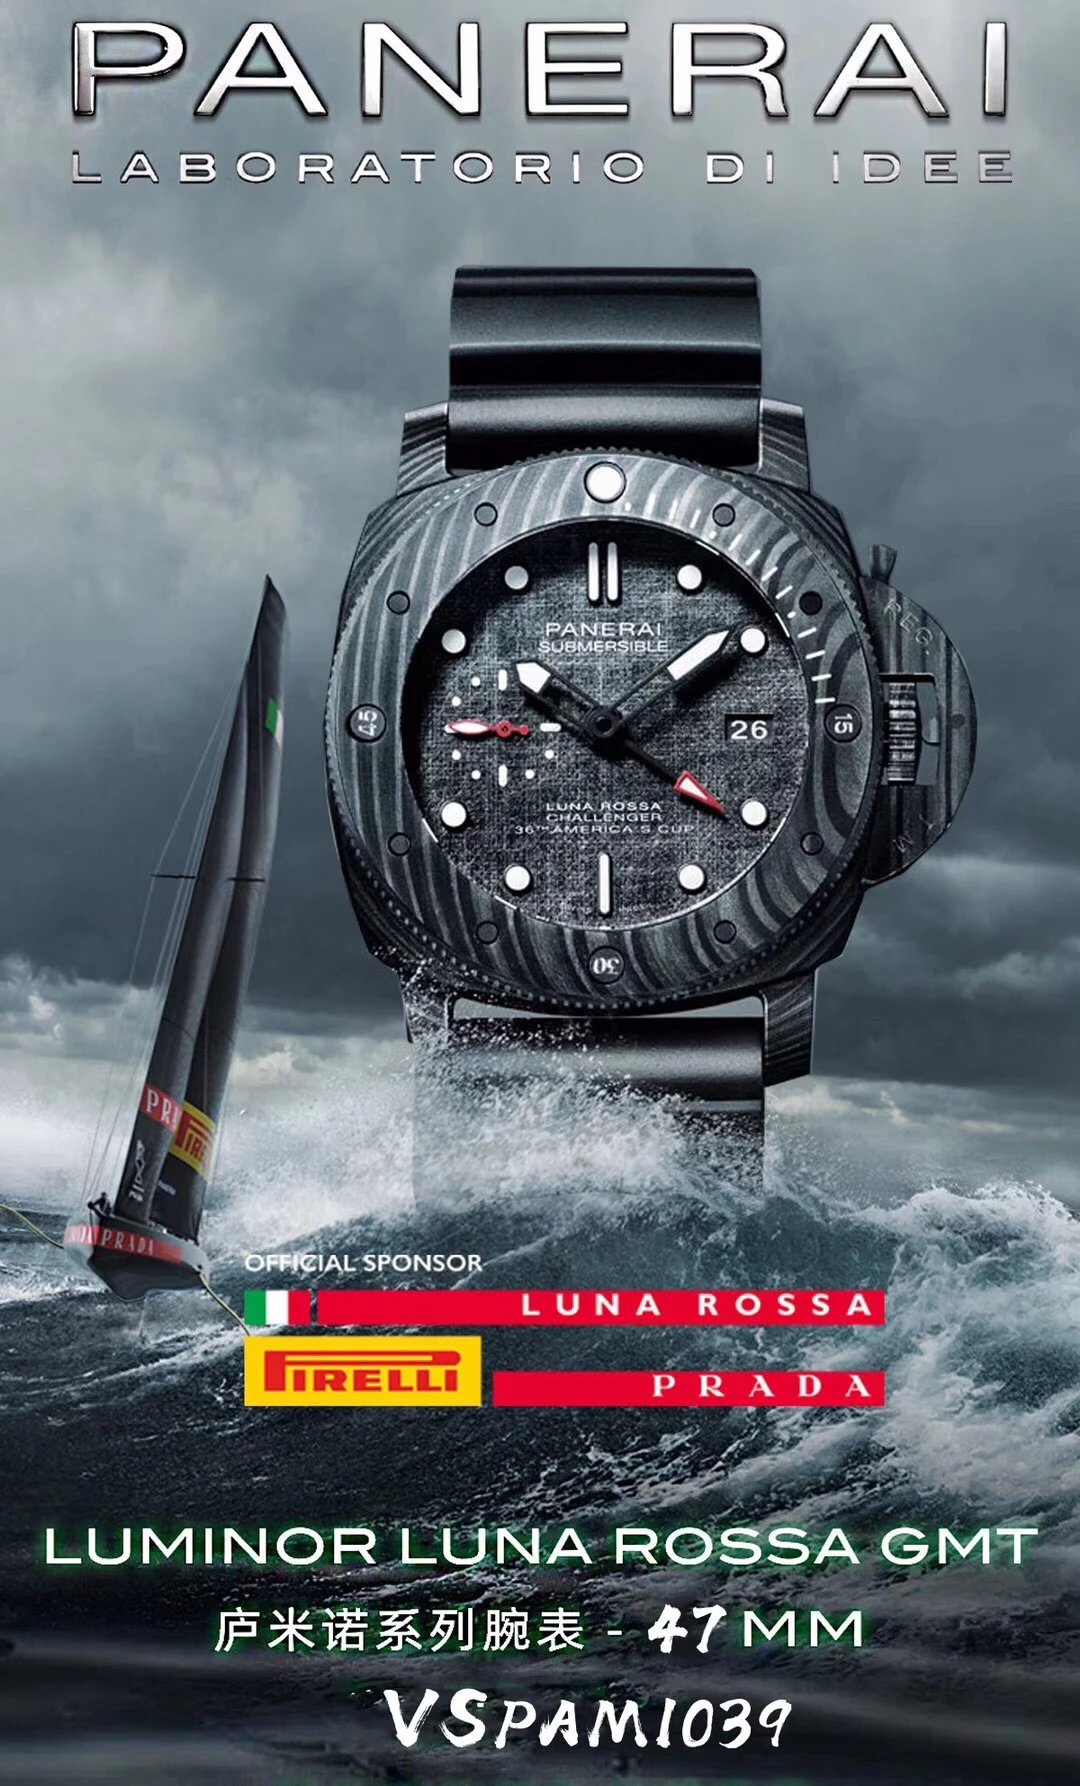 VS厂沛纳海潜行系列PAM1039碳纤维壳，第36届美洲杯帆船赛LUNAROSSA船队限量款手表、男表、机械表、包邮